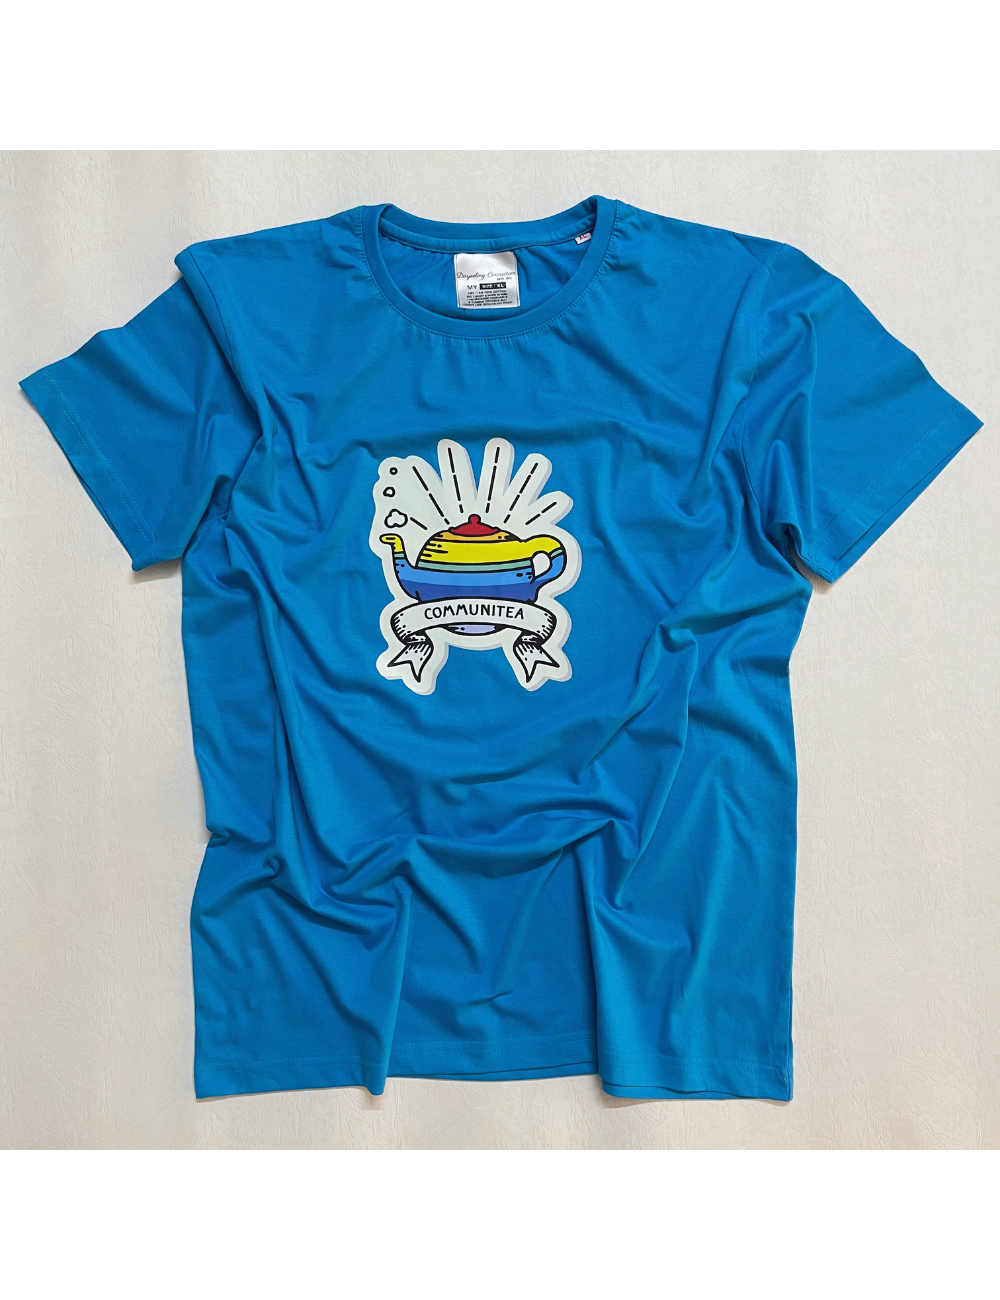 Communitea - Ocean Blue - Regular Fit 100% Cotton T-Shirt